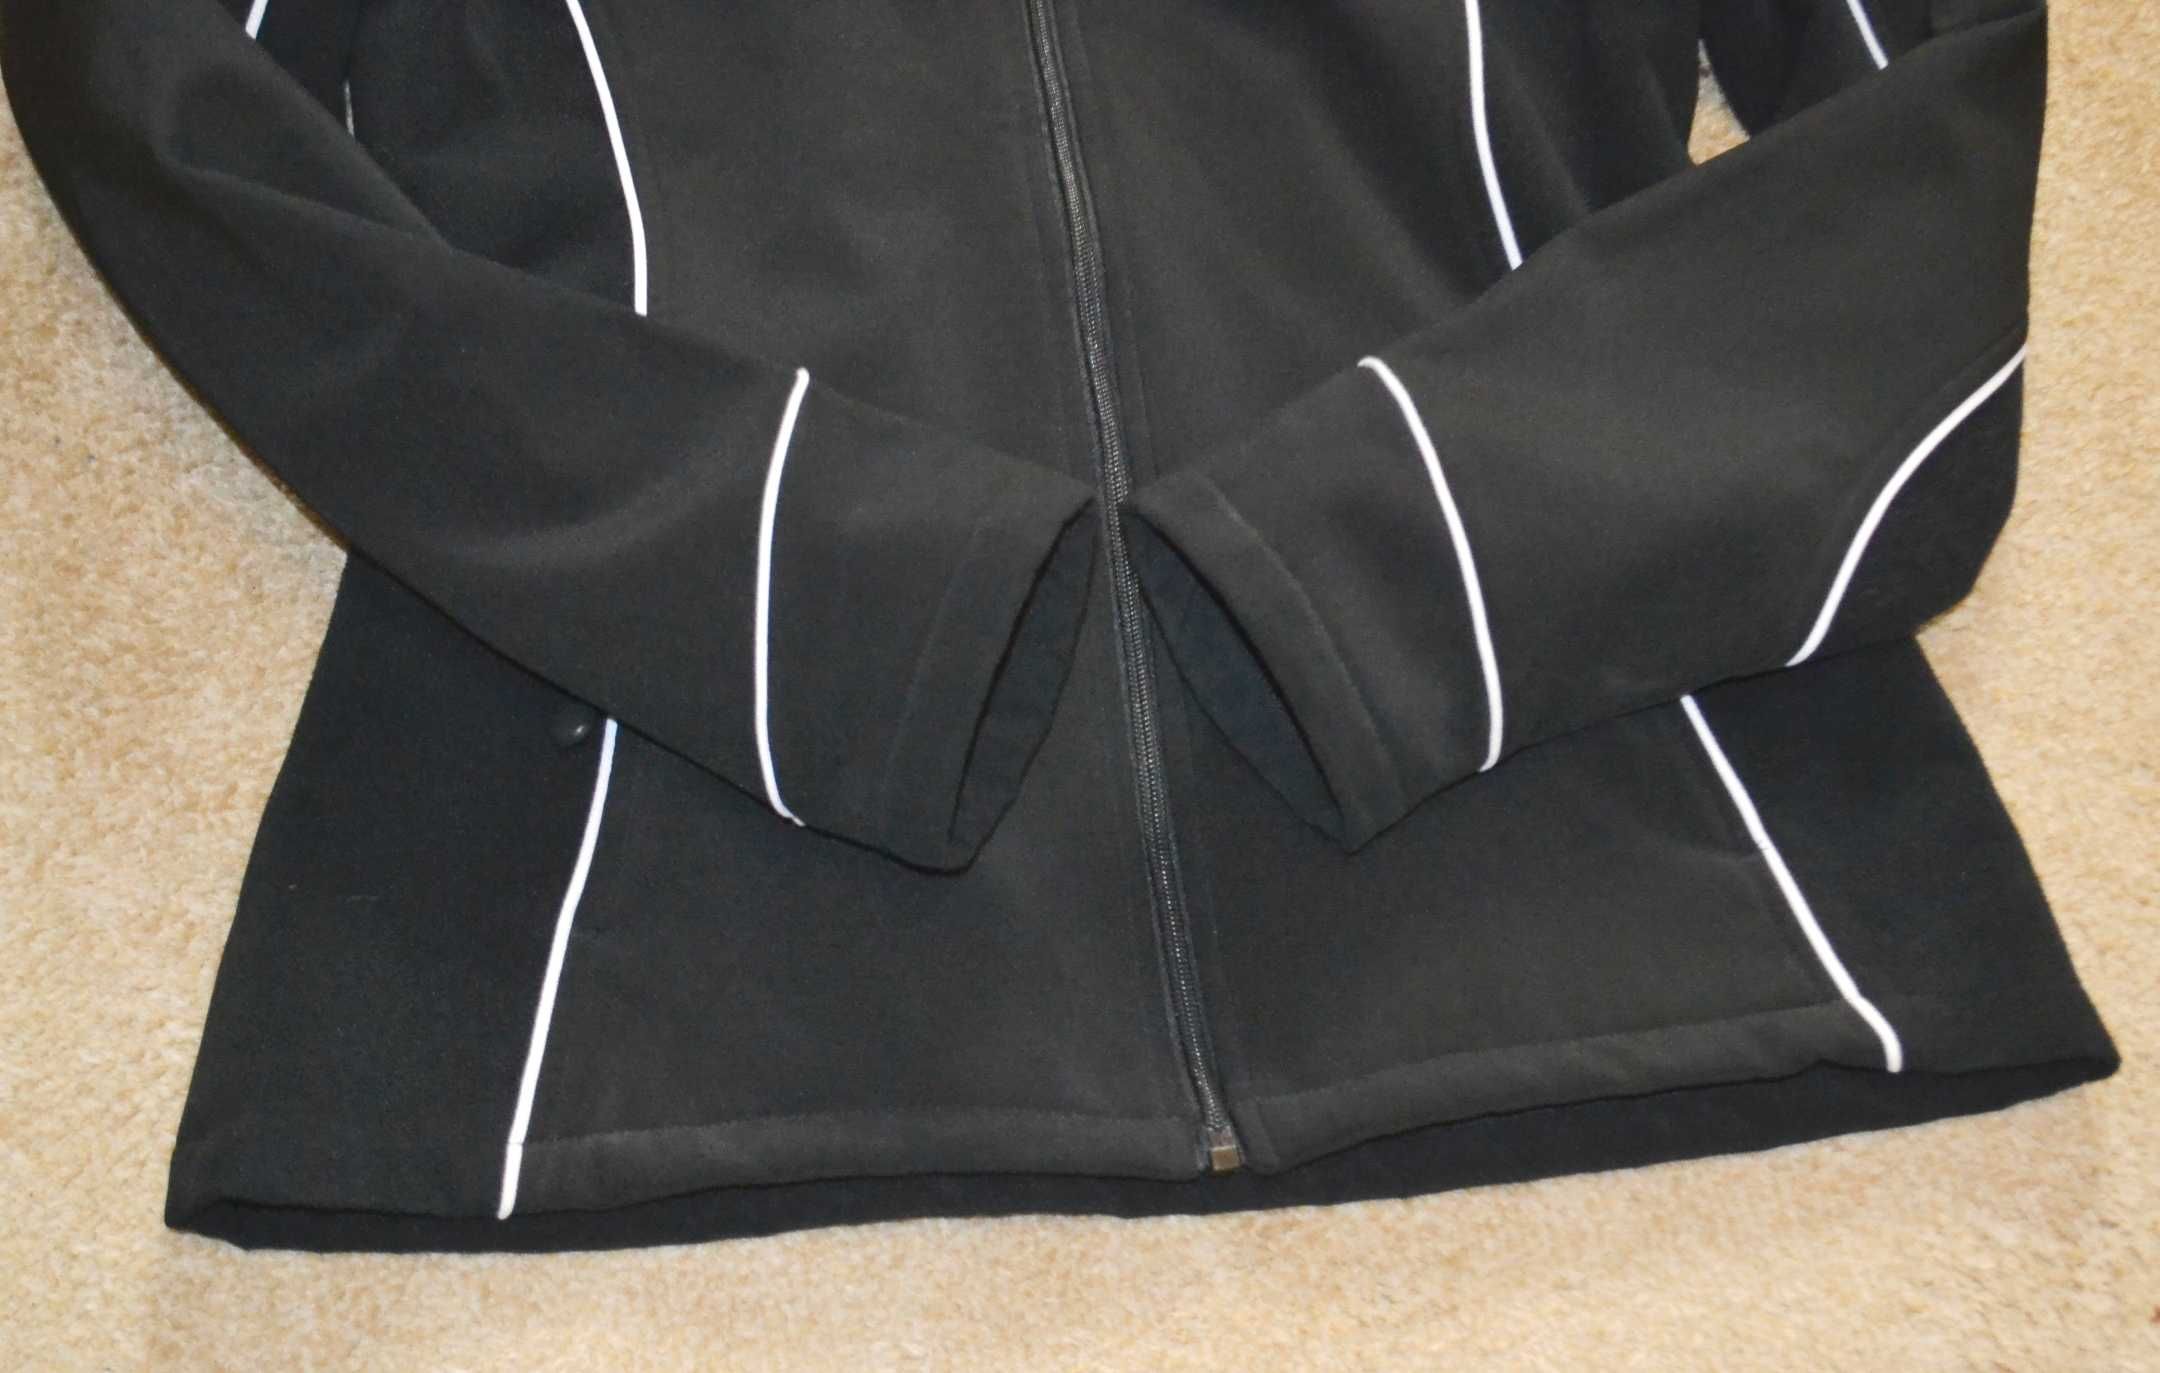 Куртка Softshell Next Sport размер 12/M